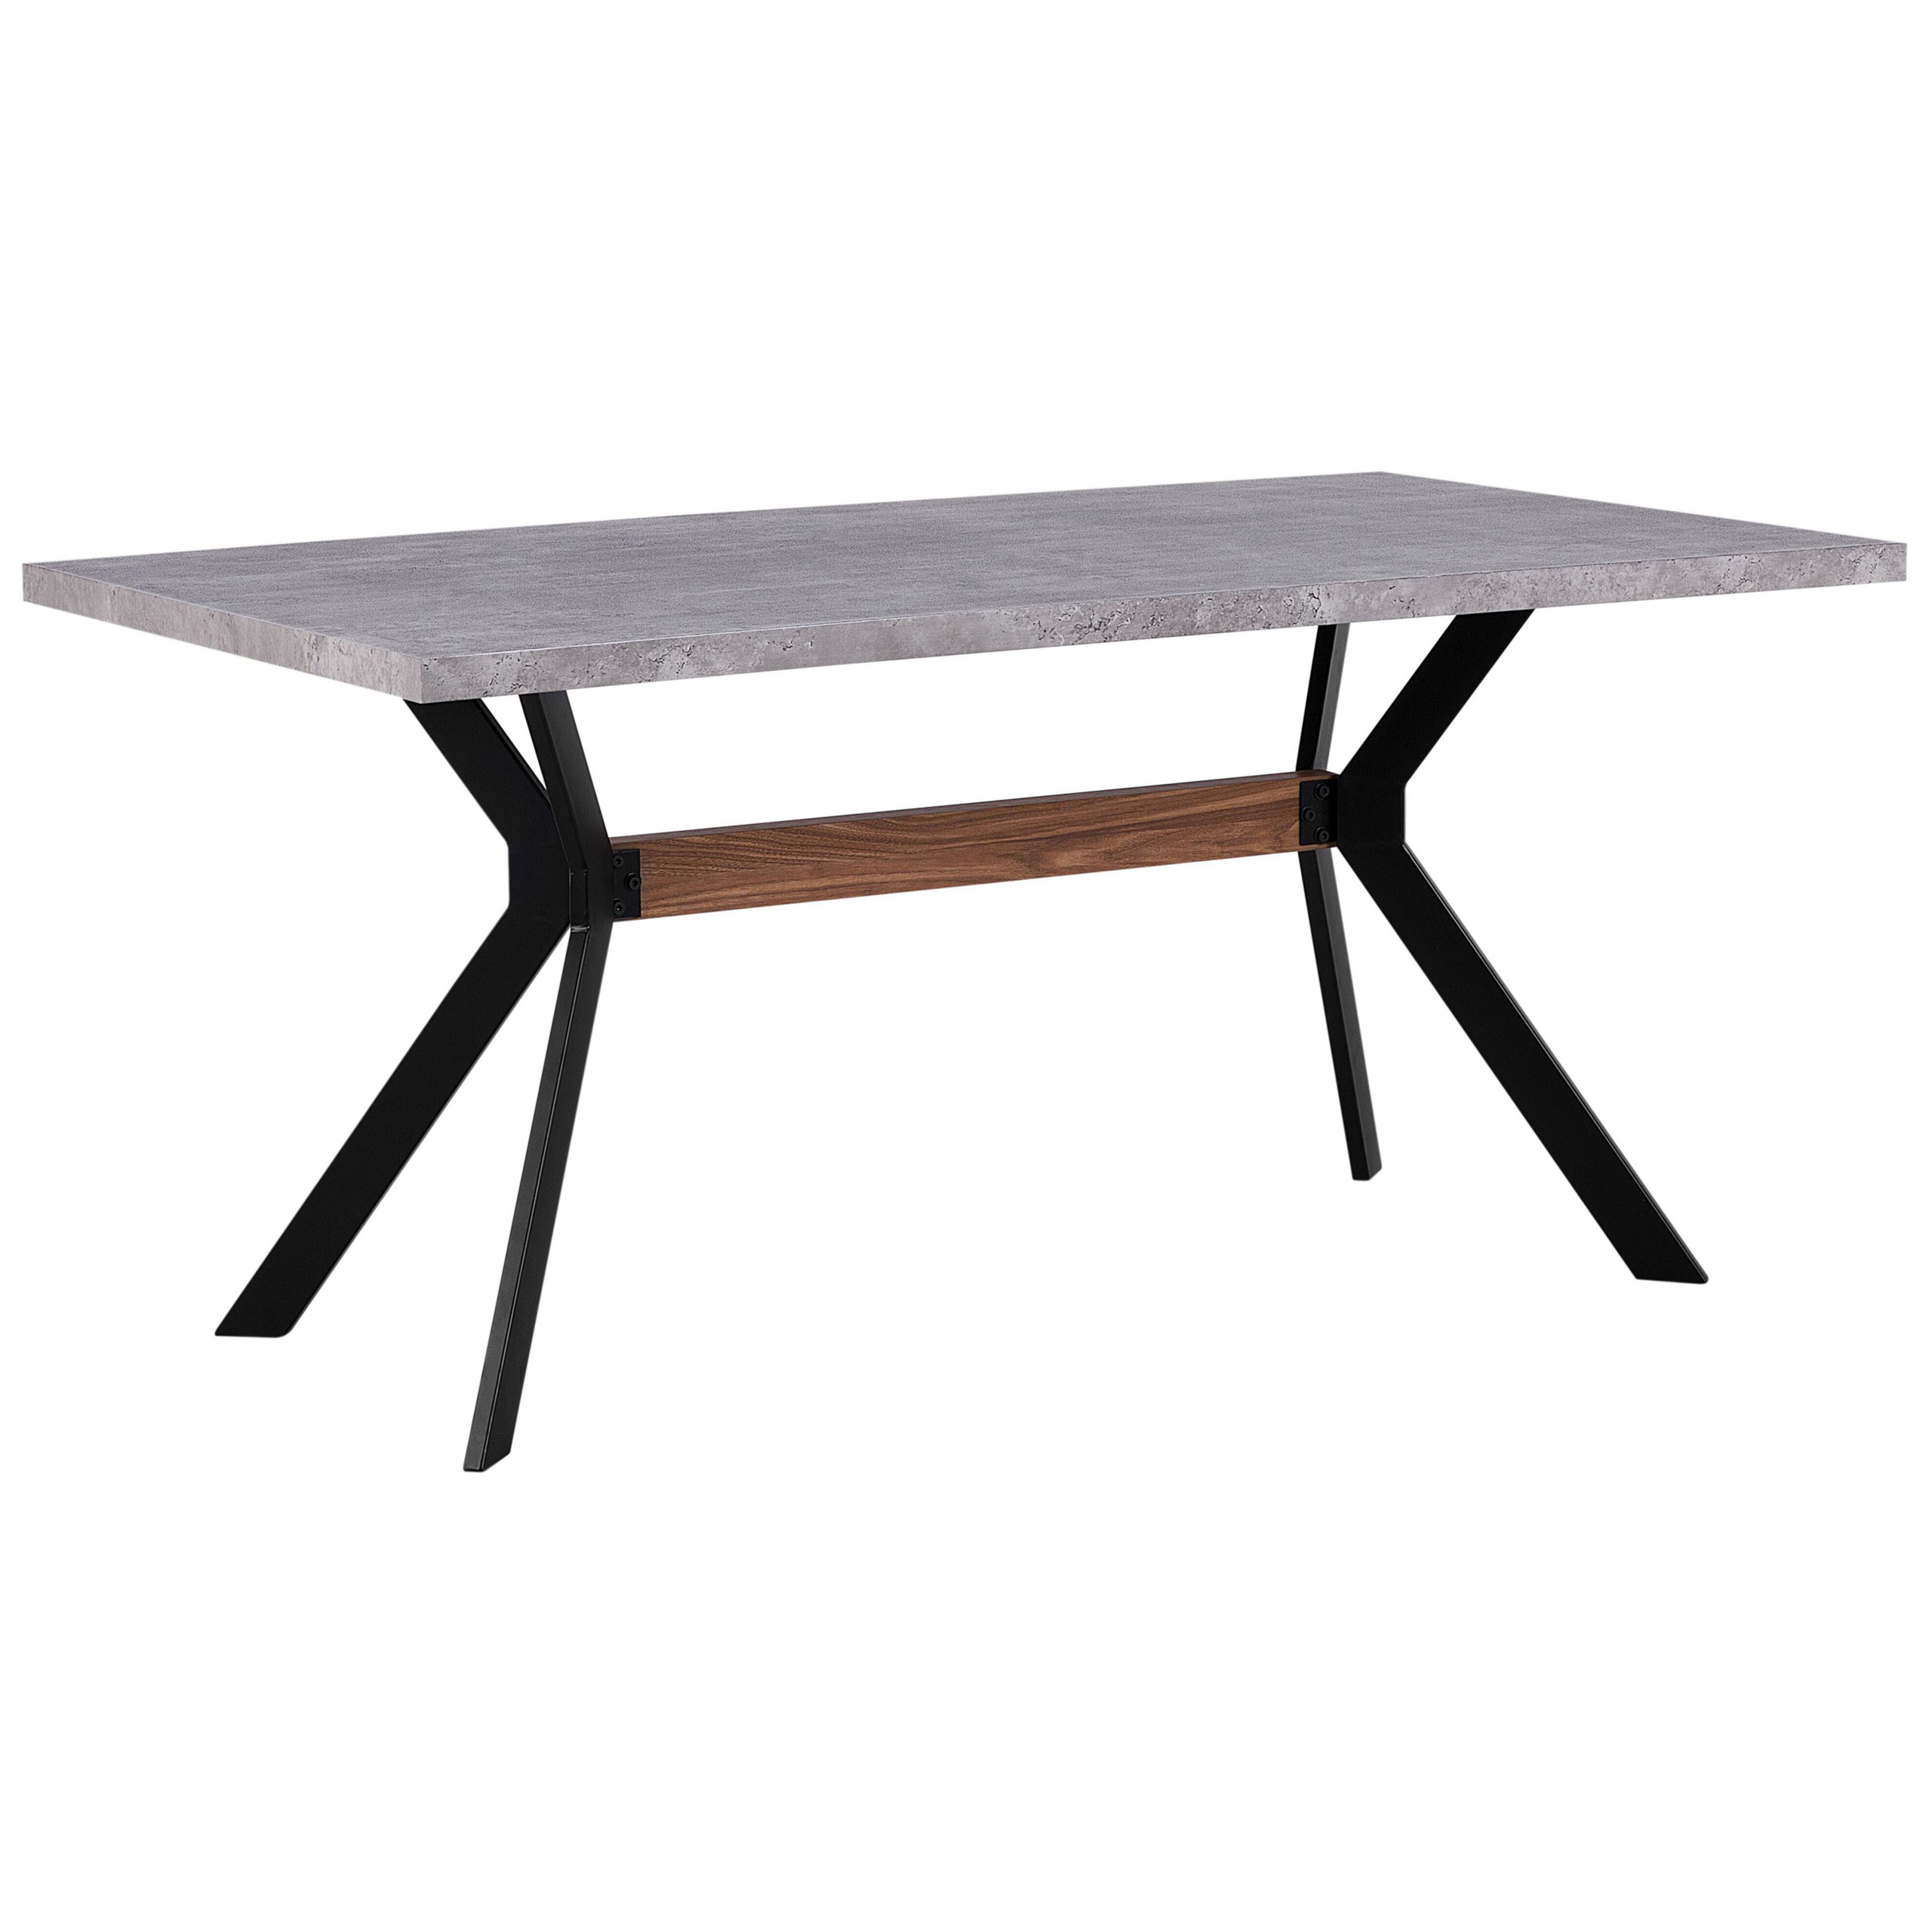 Beliani Dining Table Concrete Effect 160 x 90 cm Black Metal Legs Industrial Kitchen